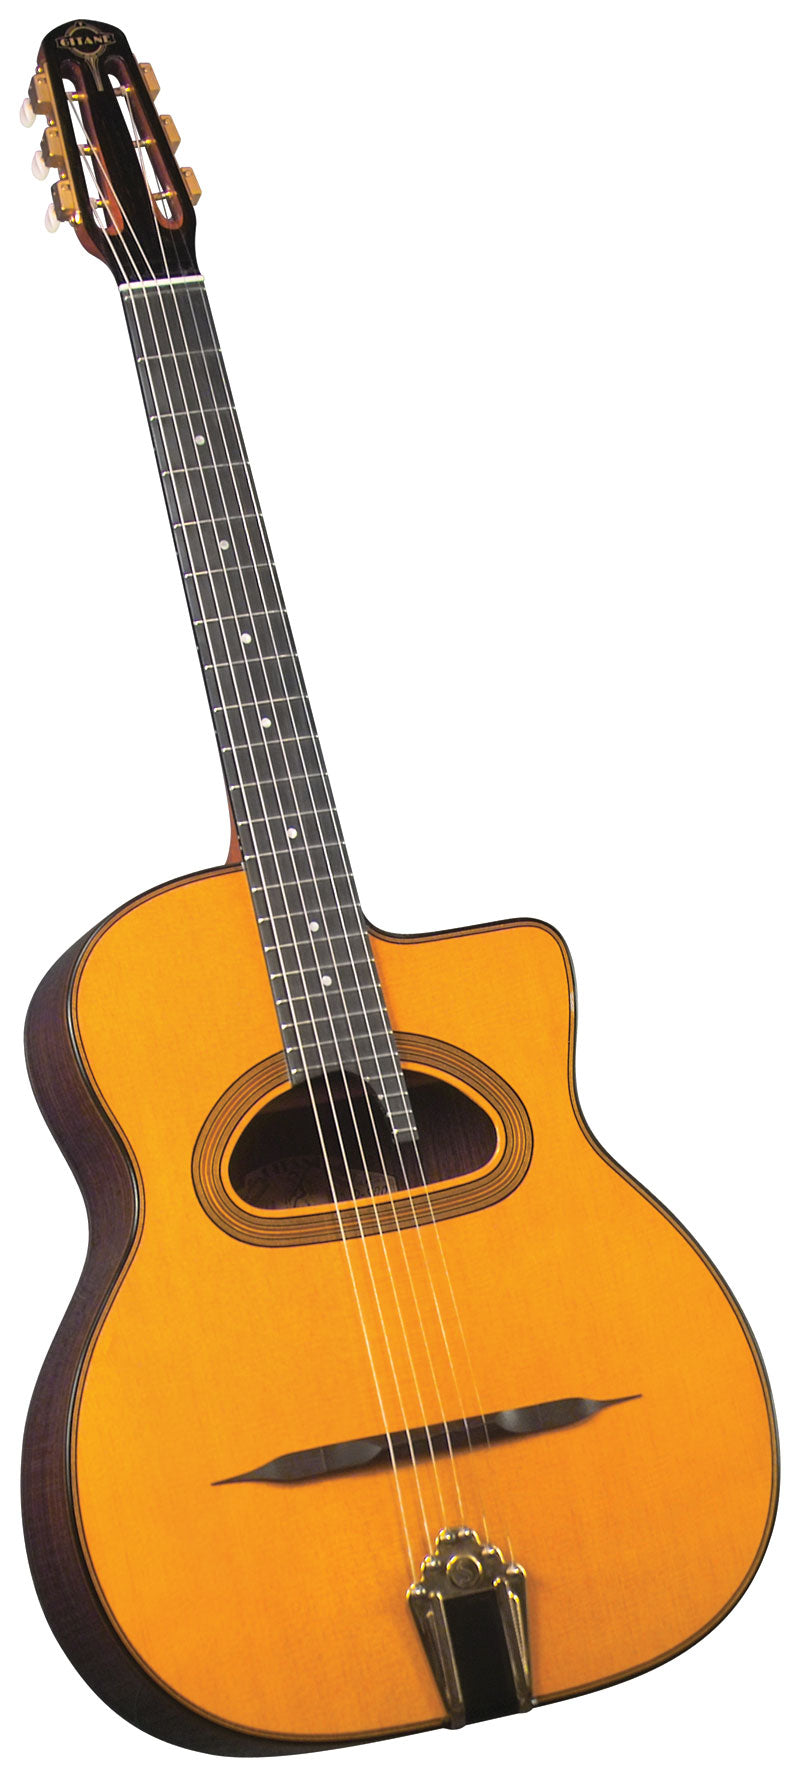 Gitane D-500 - D Hole Gypsy Guitar